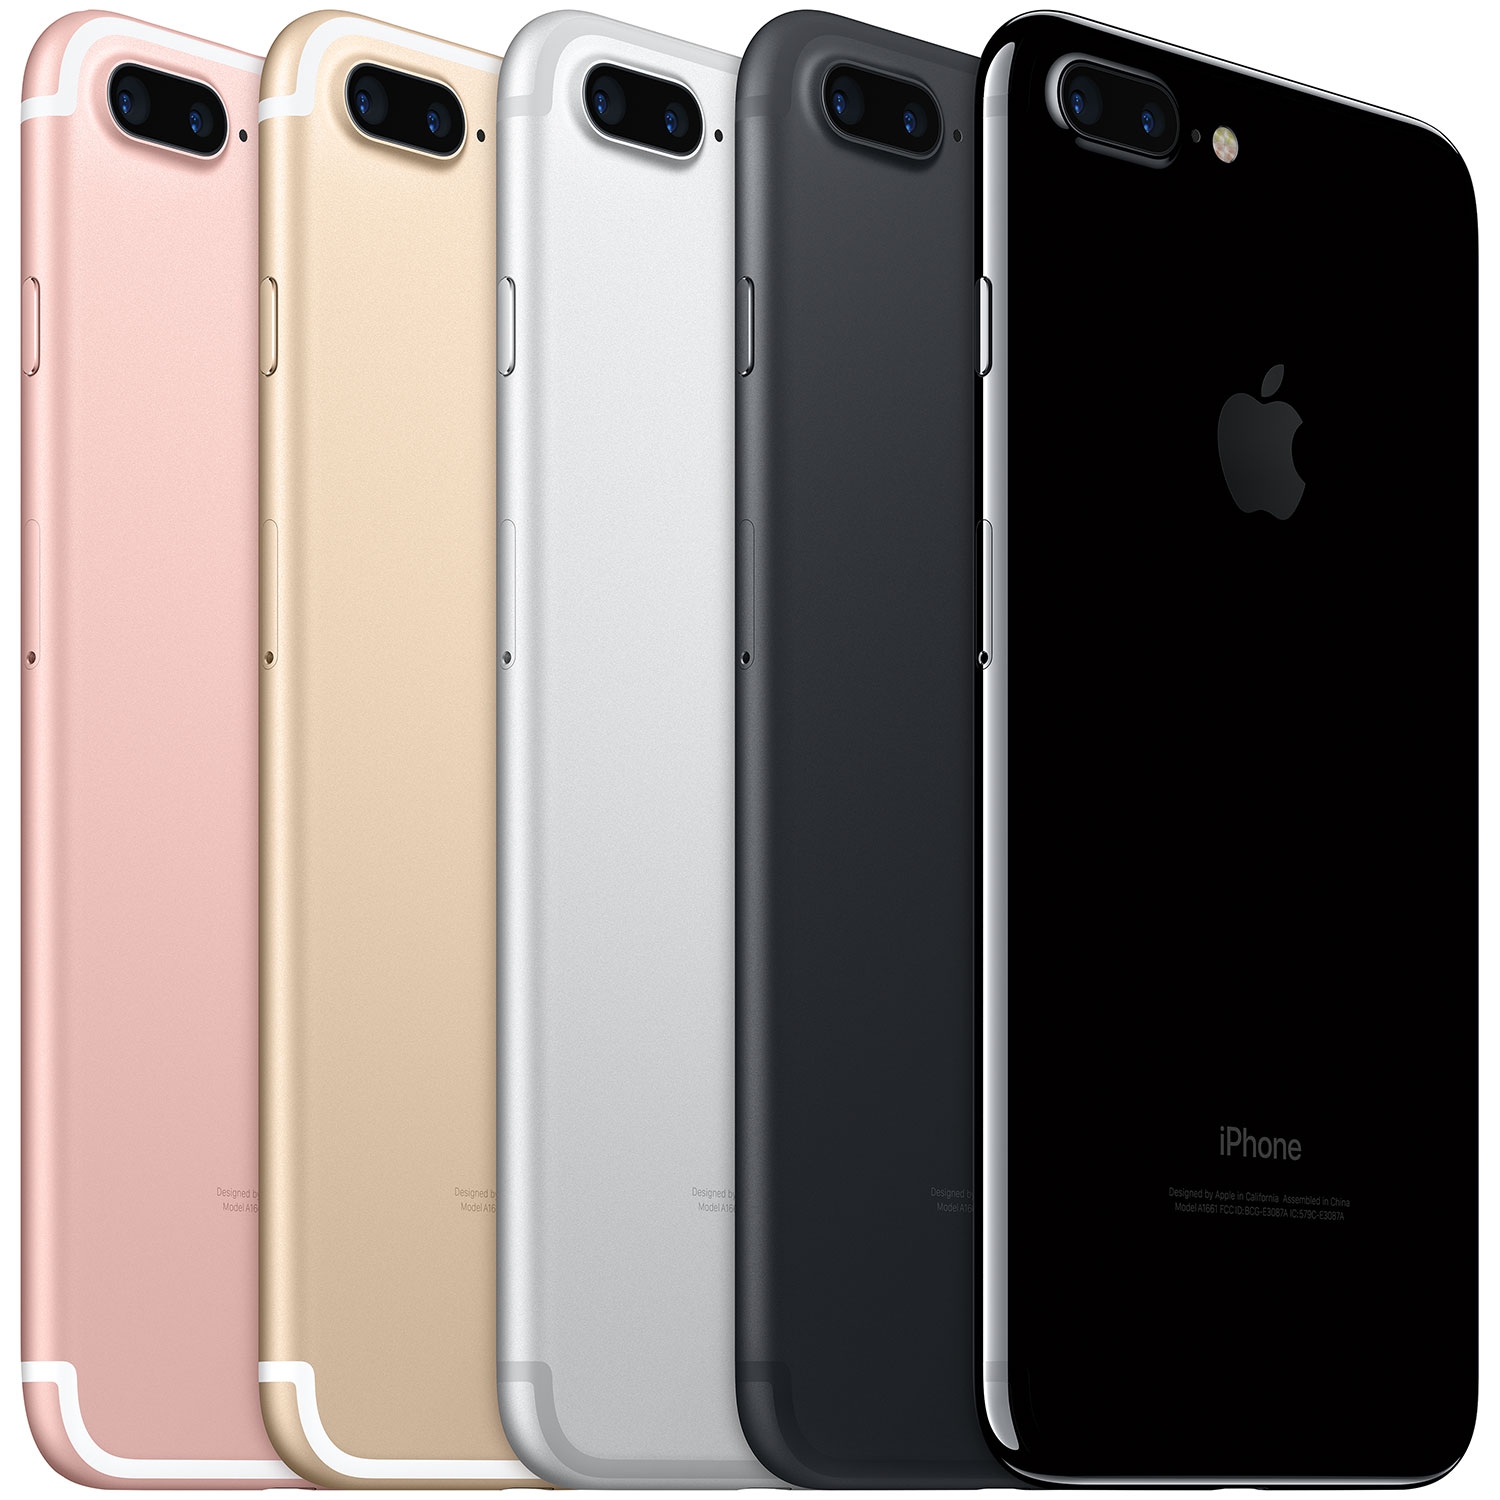 Apple iPhone 7 Plus 32GB Smartphone - Rose Gold - Unlocked - Open Box